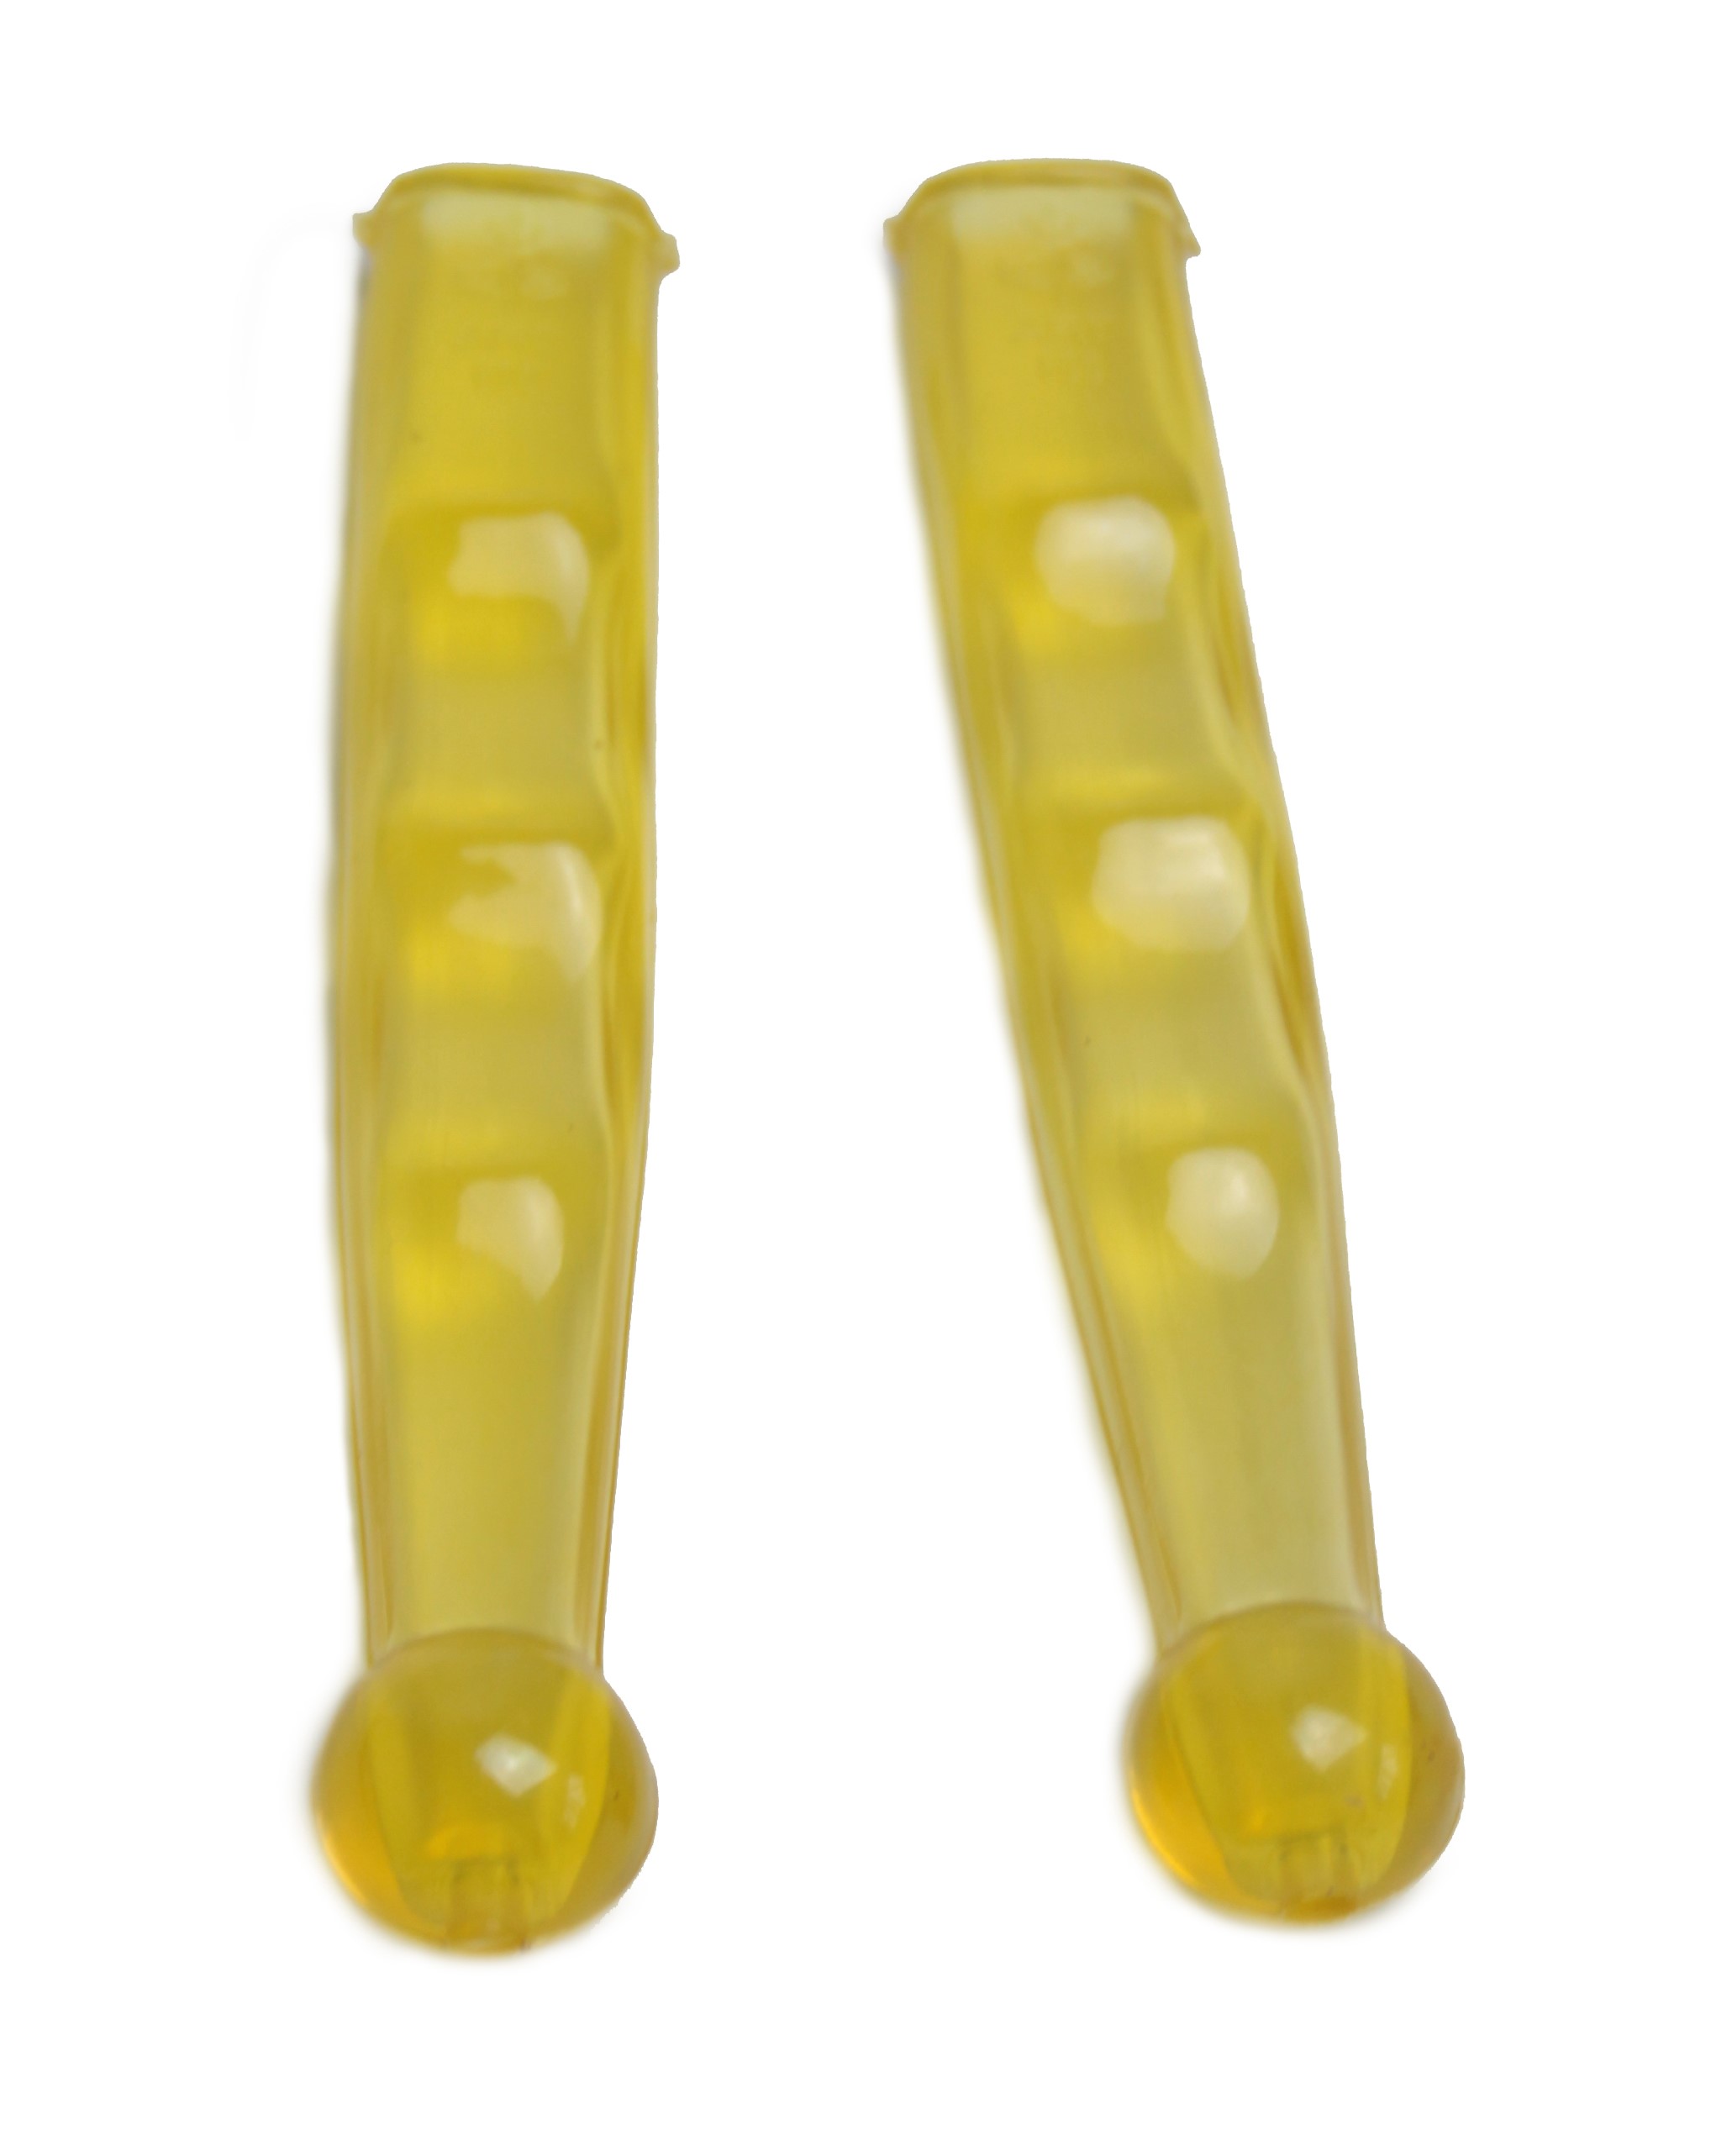 Bremshebel Überzug Gummi gelb 1 Paar